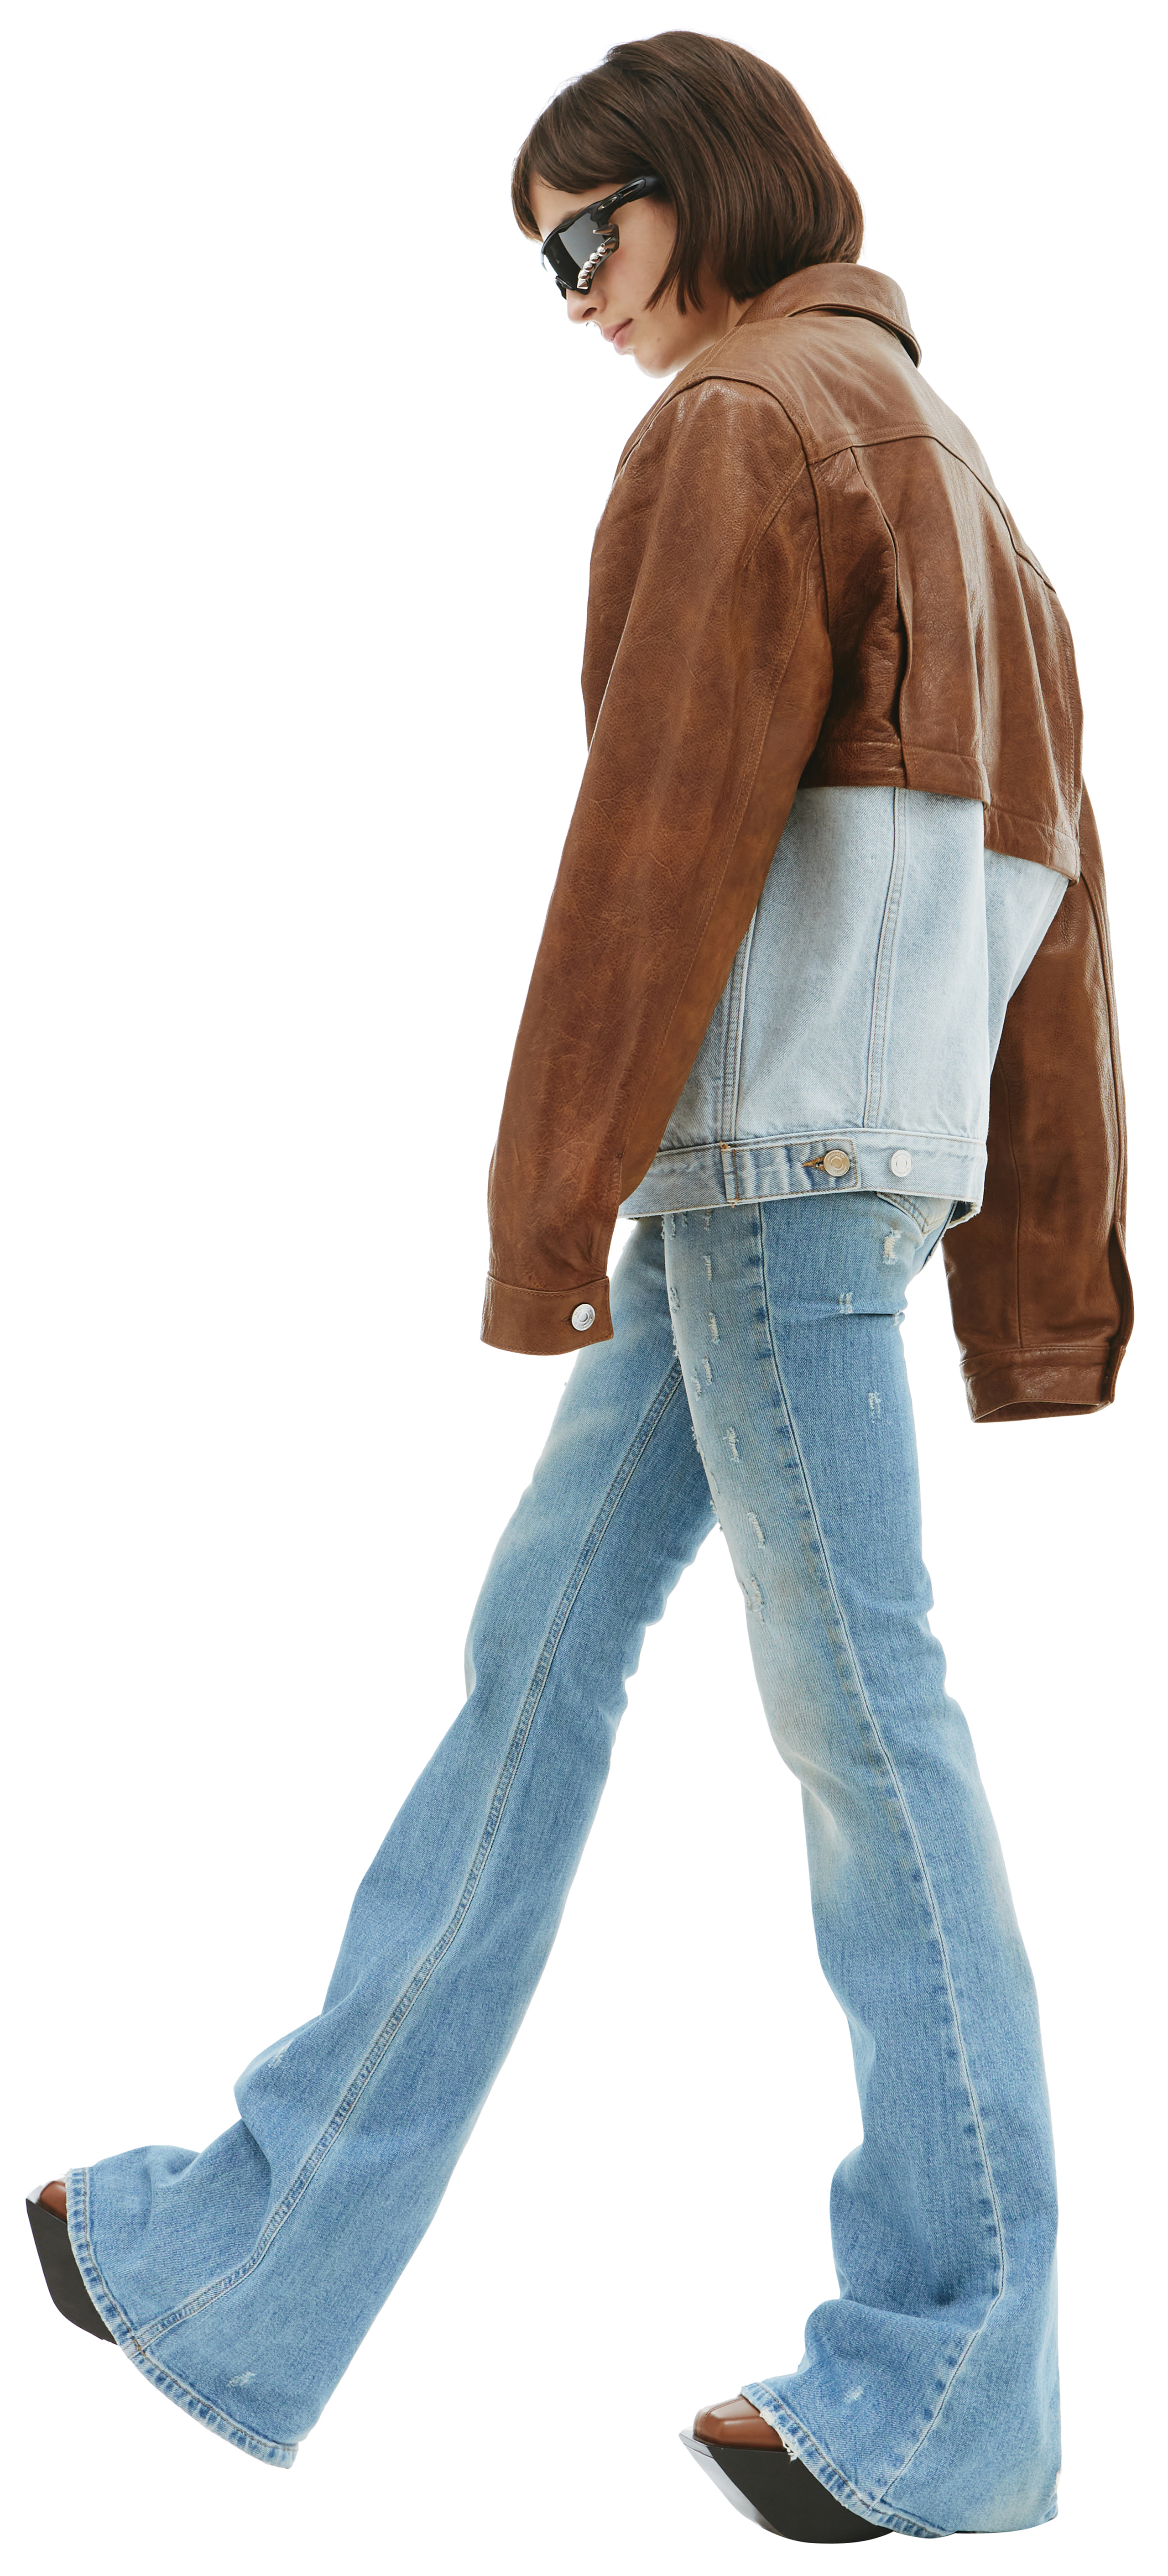 Buy VTMNTS women brown convertible leather and denim jacket for $1,725  online on SV77, VL14JA700C